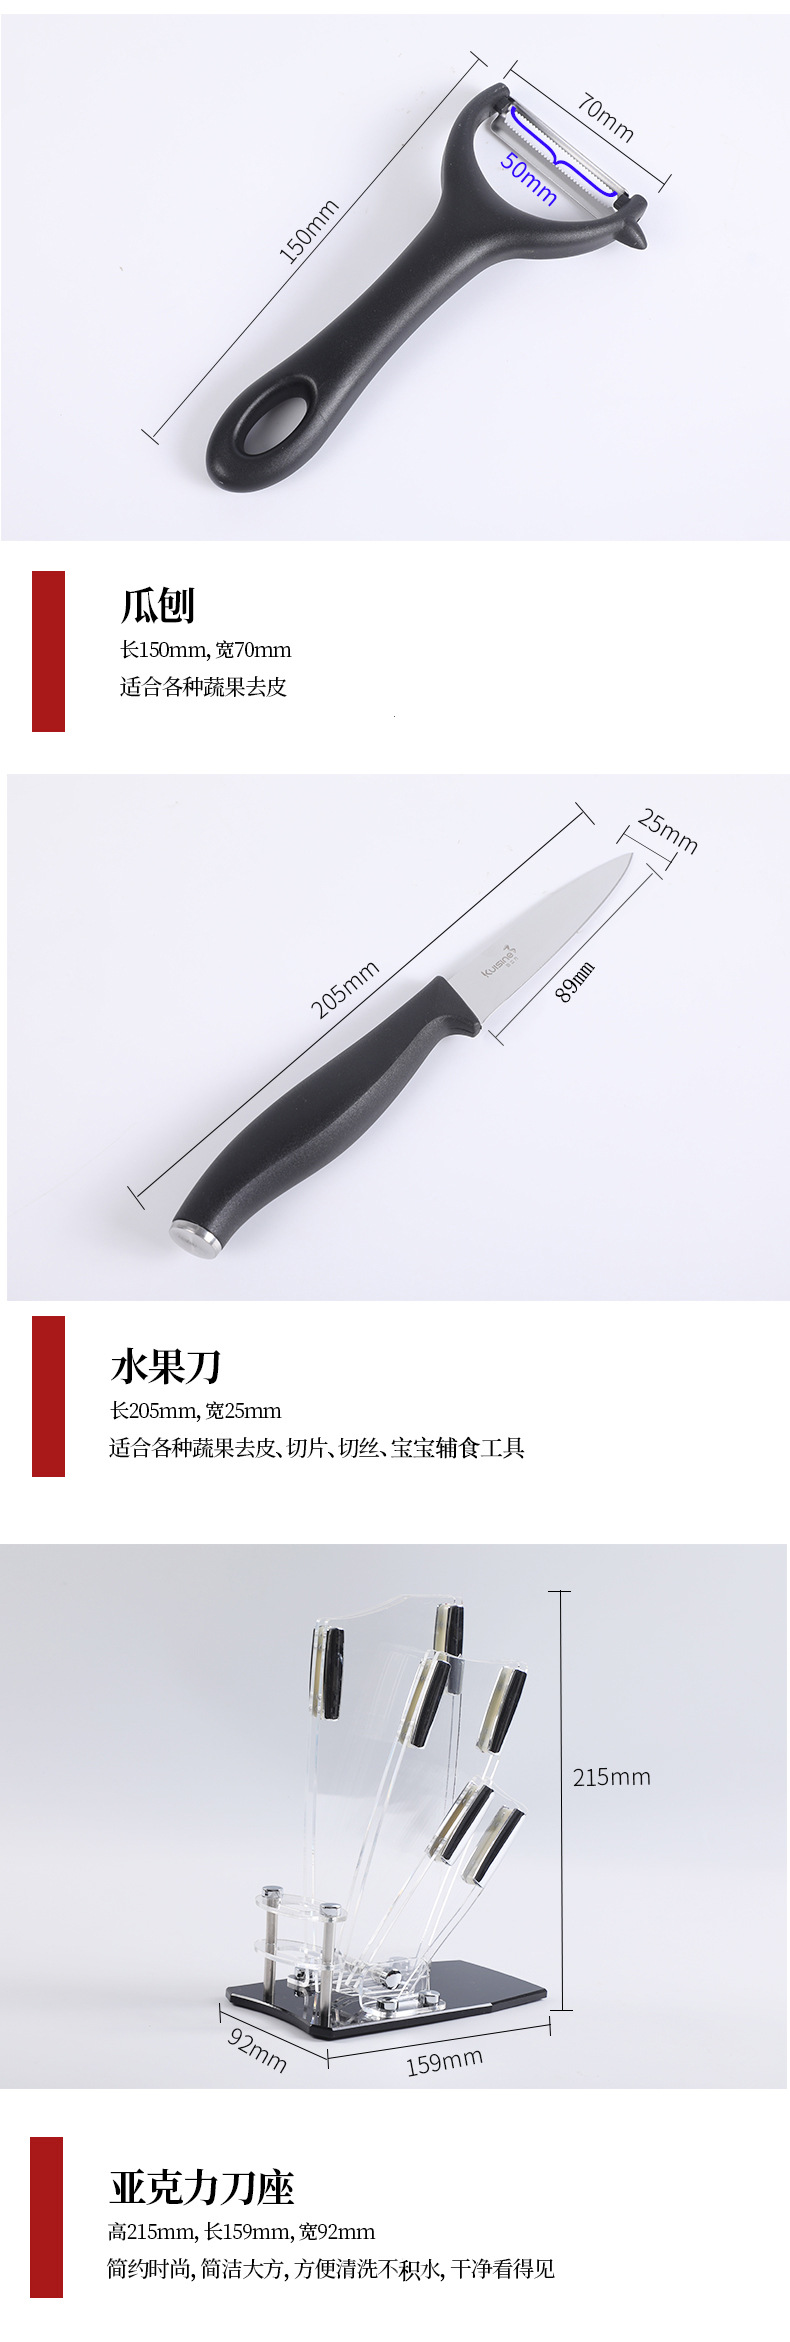 kitchen knife set (11)